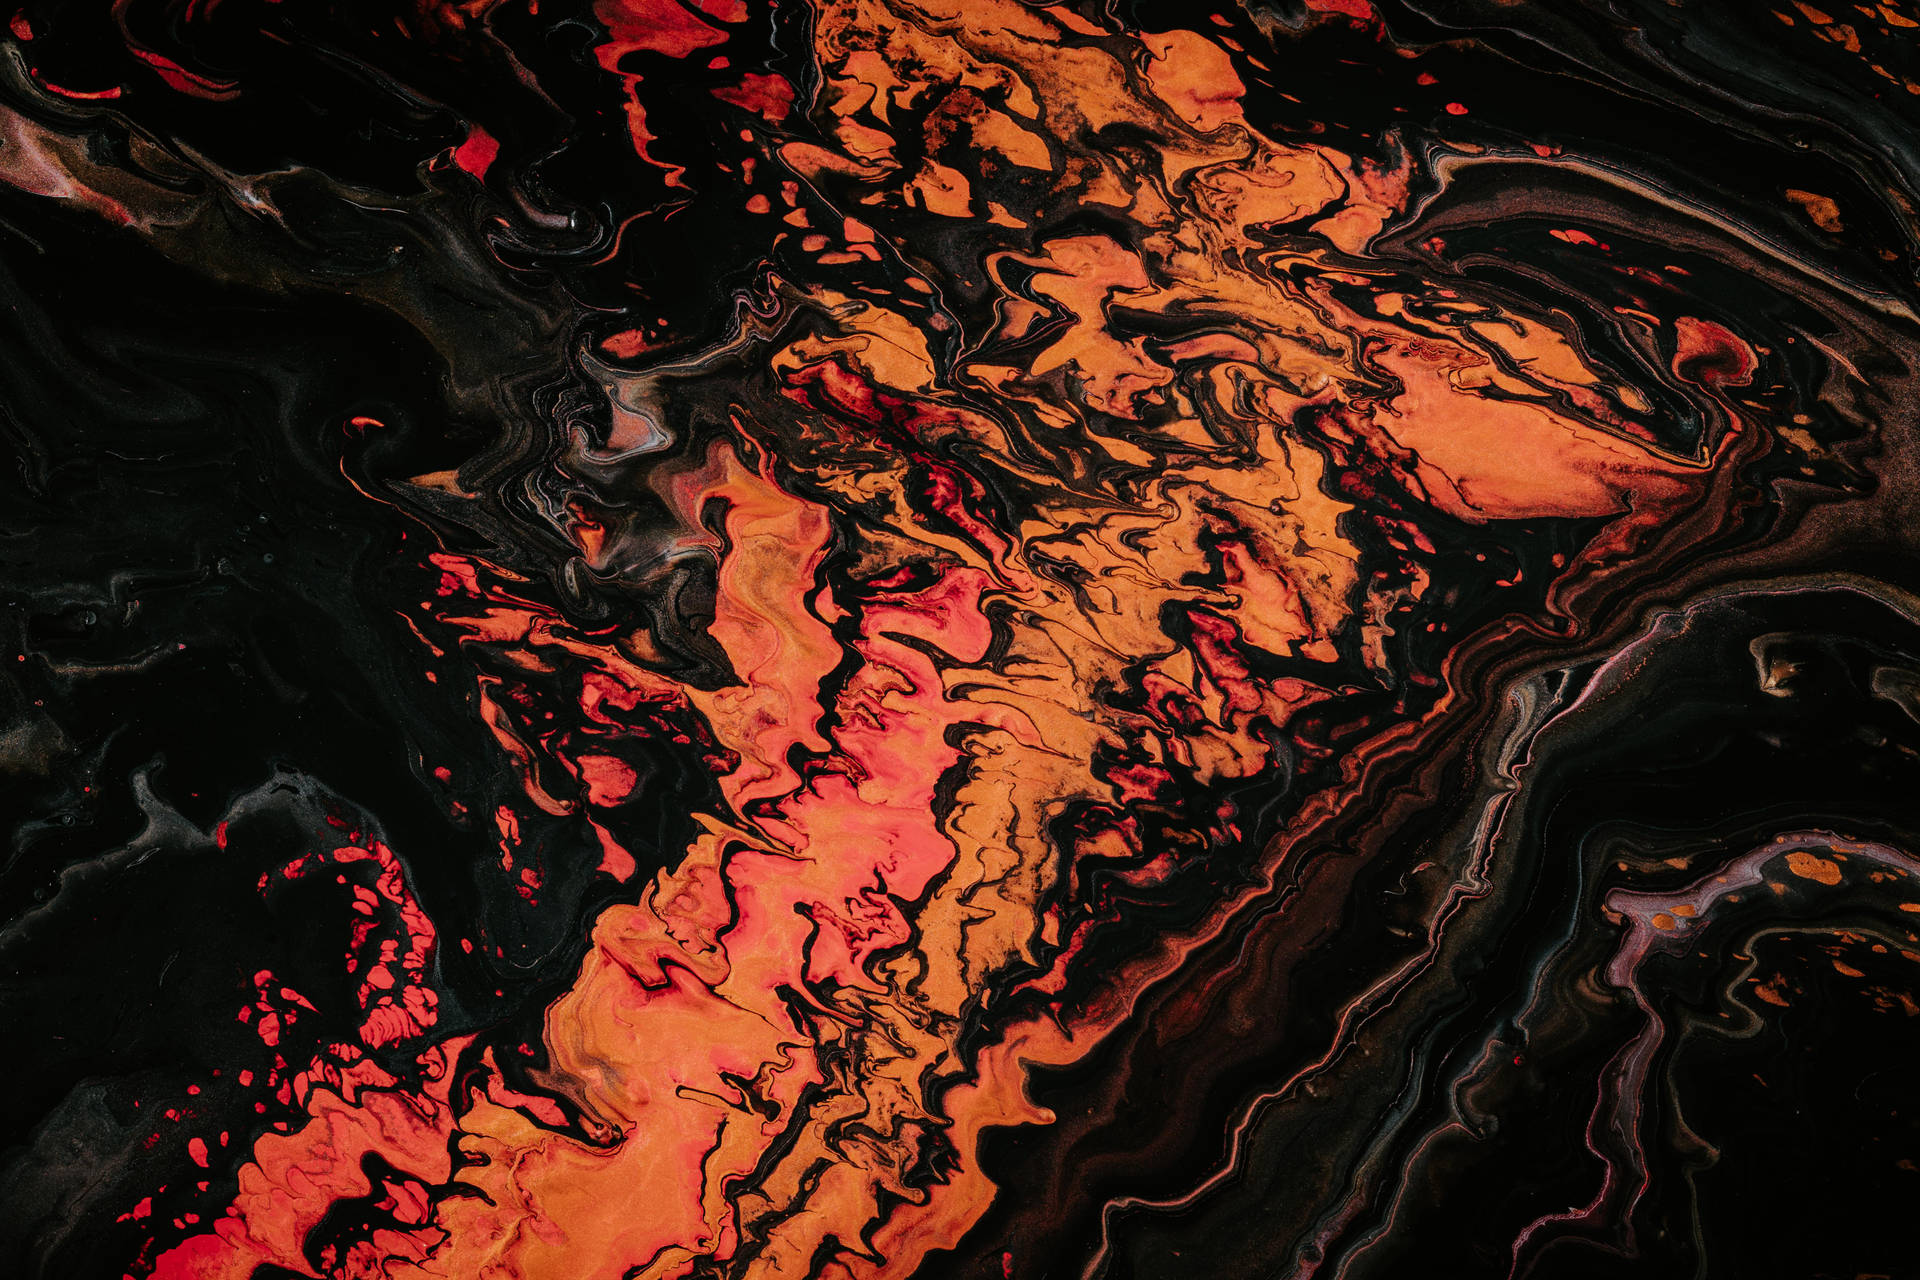 Organic Fluid Curving Dark Abstract